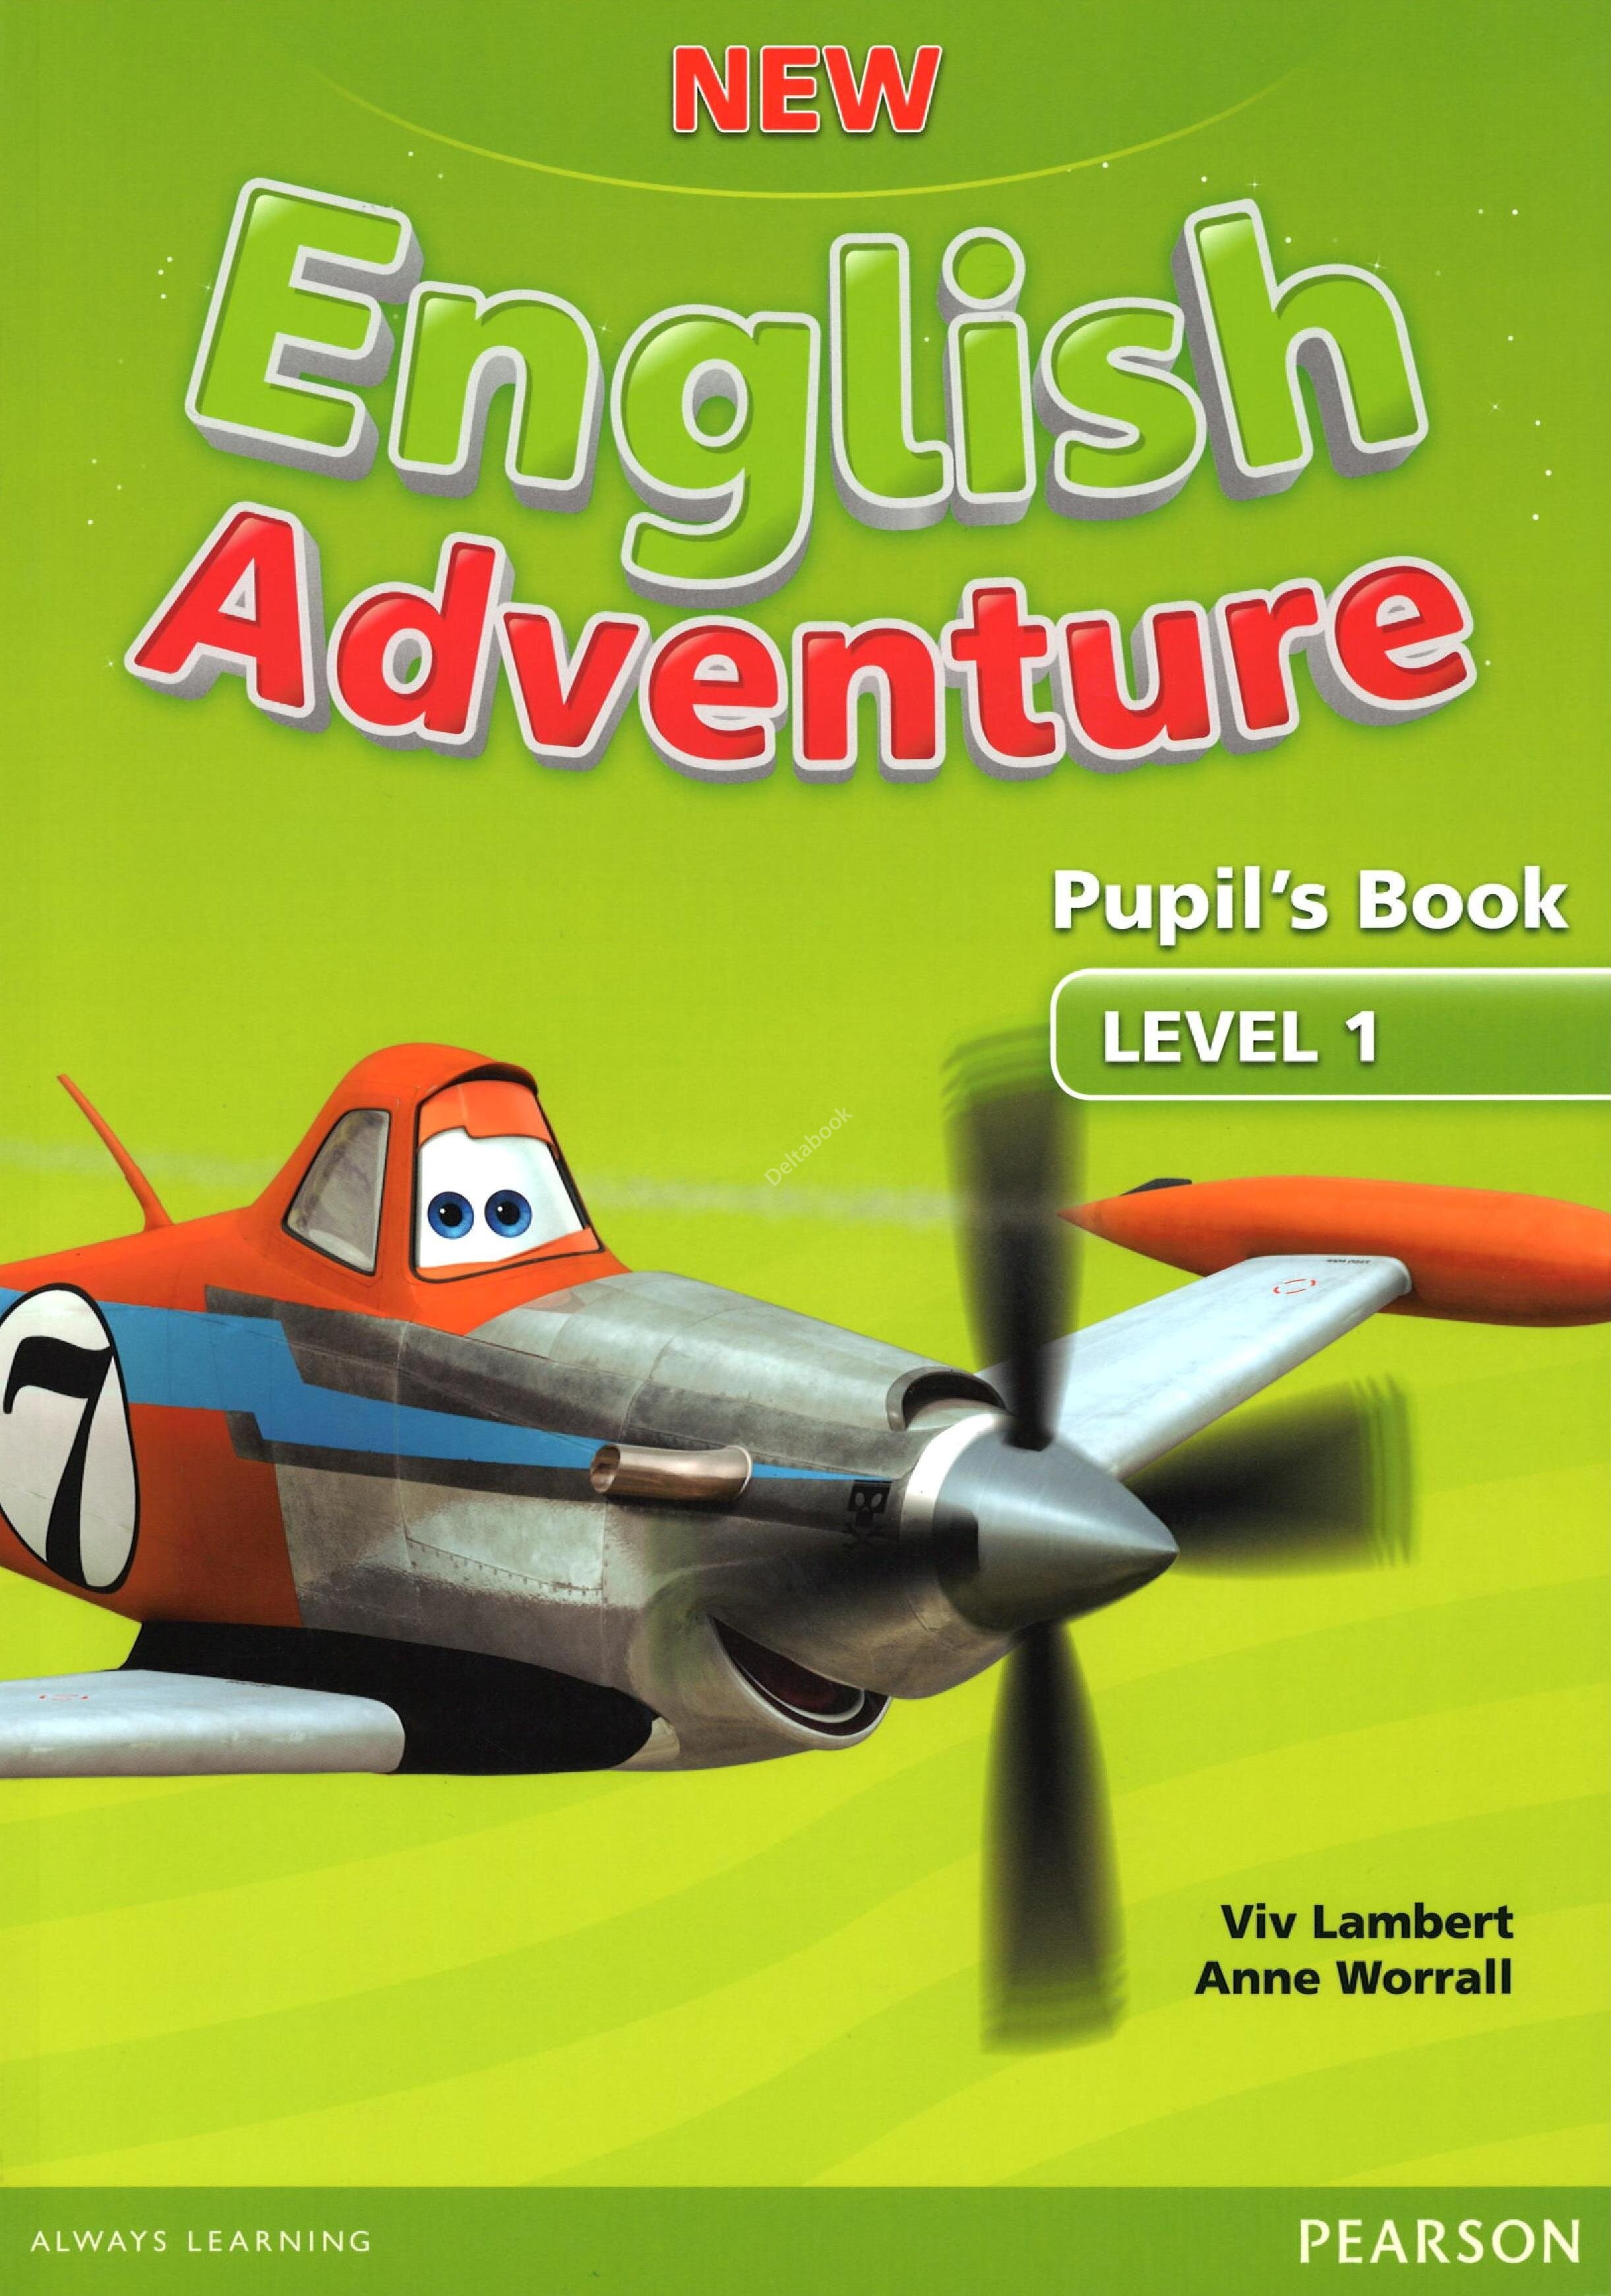 New English Adventure, Pupil's Book, Level 1